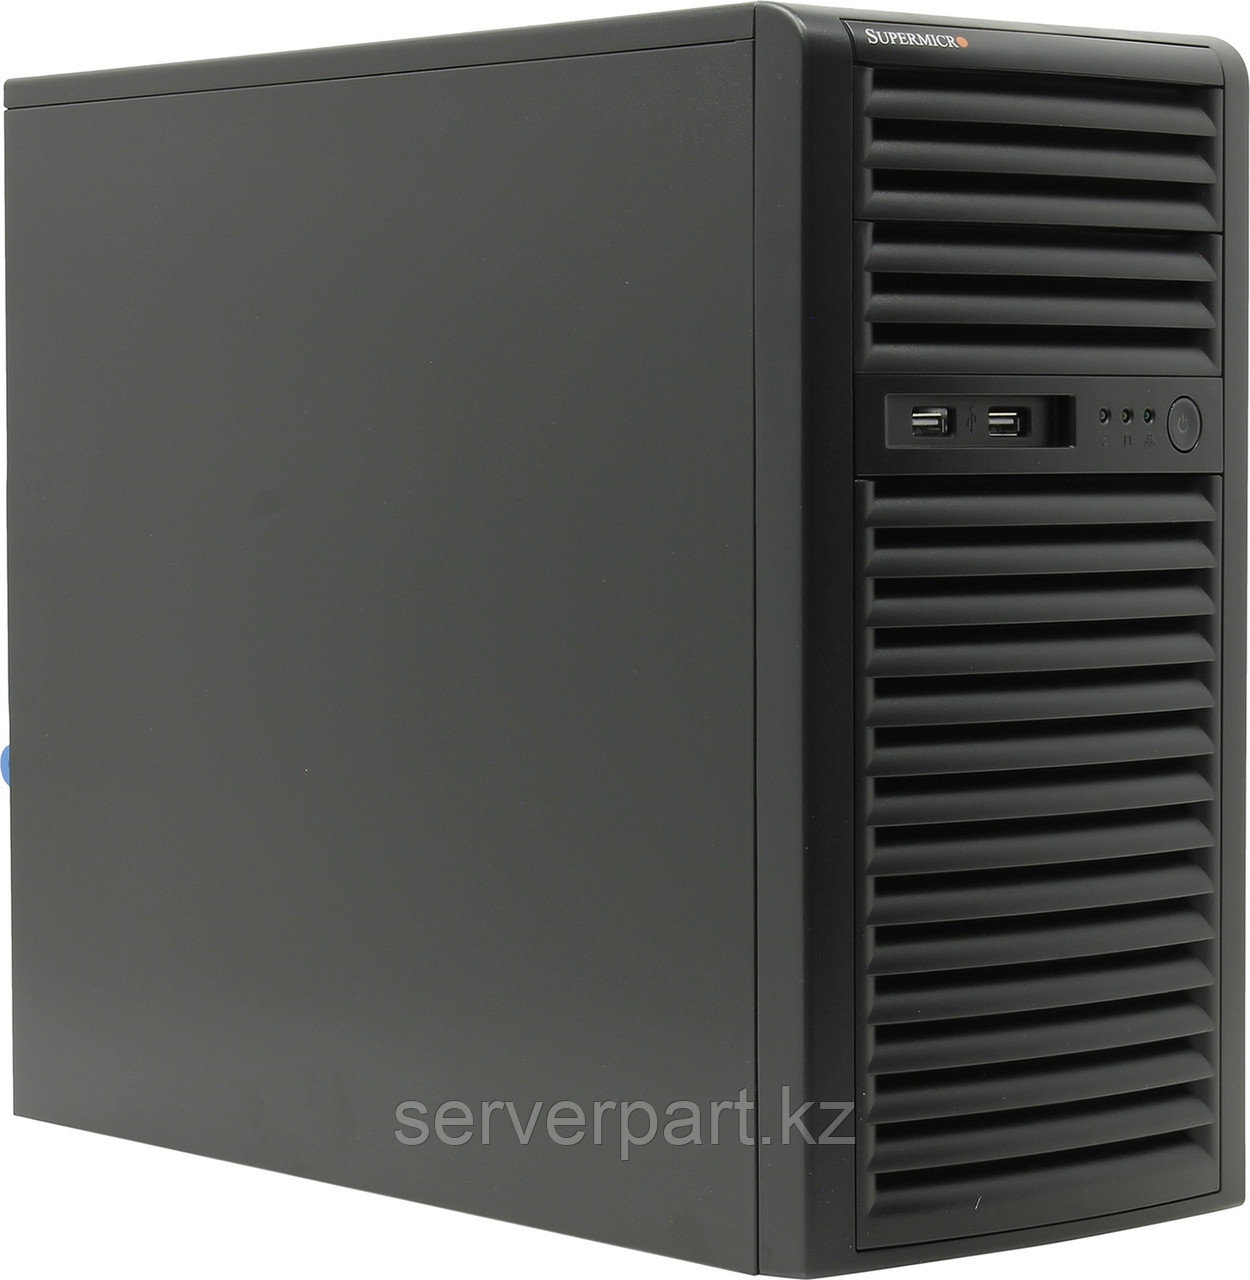 Сервер Supermicro SYS-5039D Tower/4-core intel xeon E3-1220v6 3GHz/64GB EUDIMM/1x480GB SSD DT Hyb